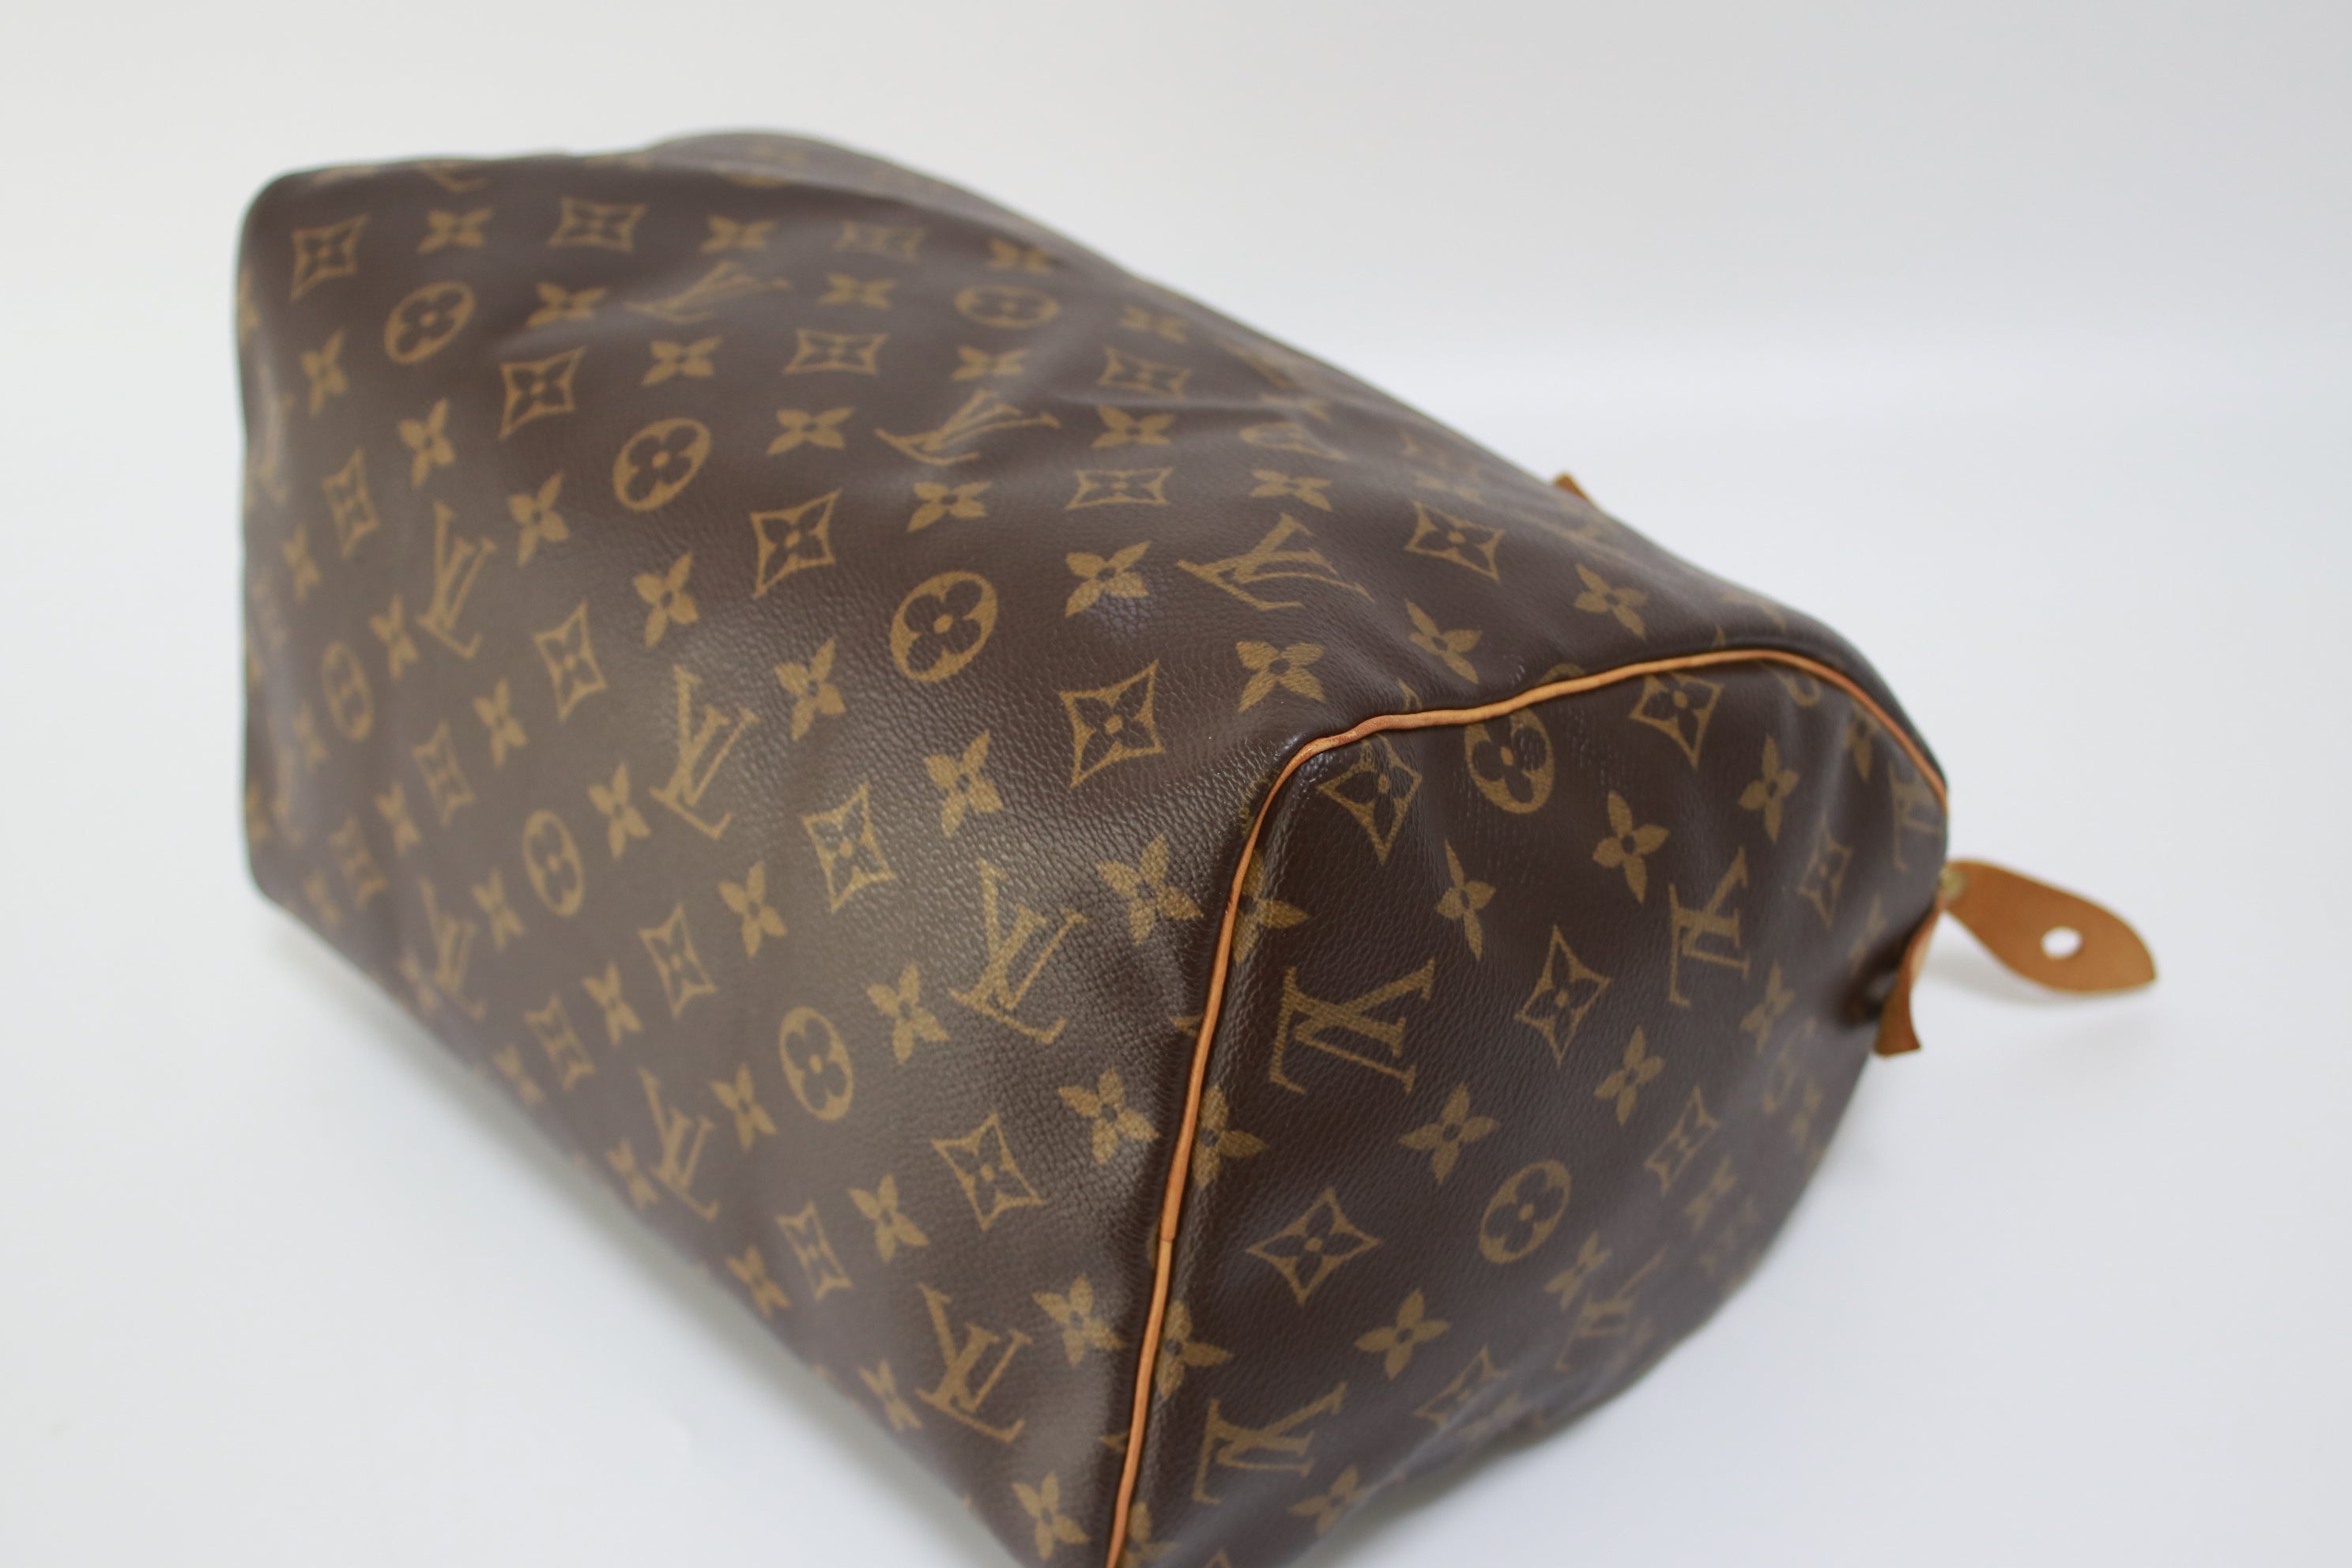 Louis Vuitton Speedy 30 Handbag Used (6039)